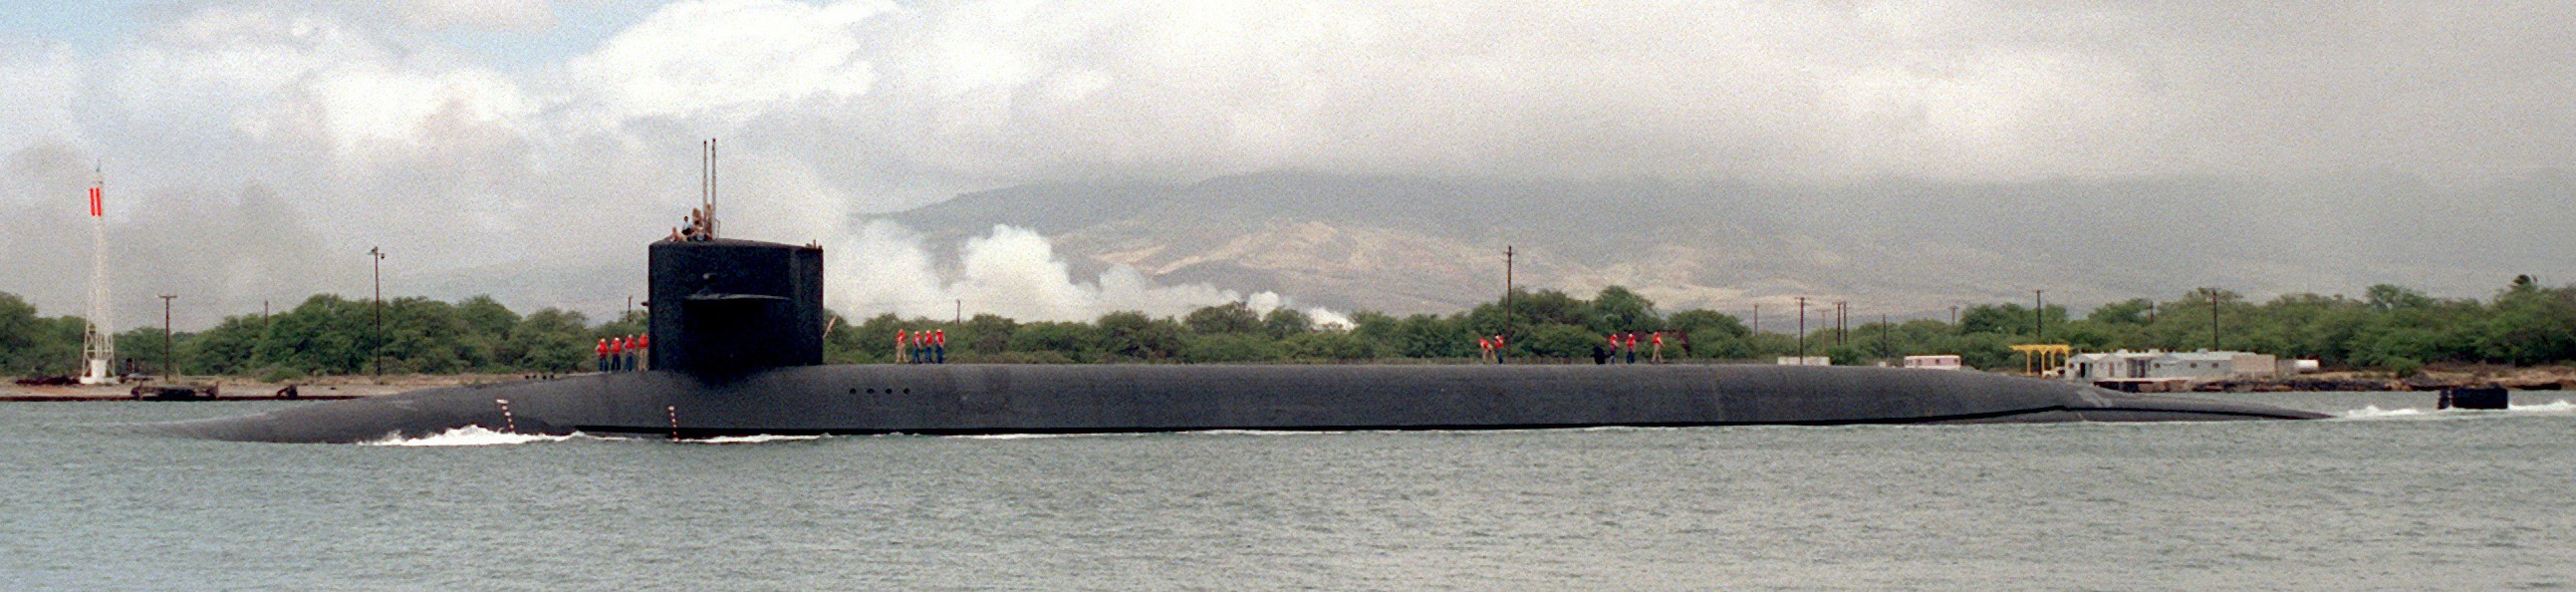 ssbn-726 uss ohio ballistic missile submarine us navy 1986 58 exercise rimpac